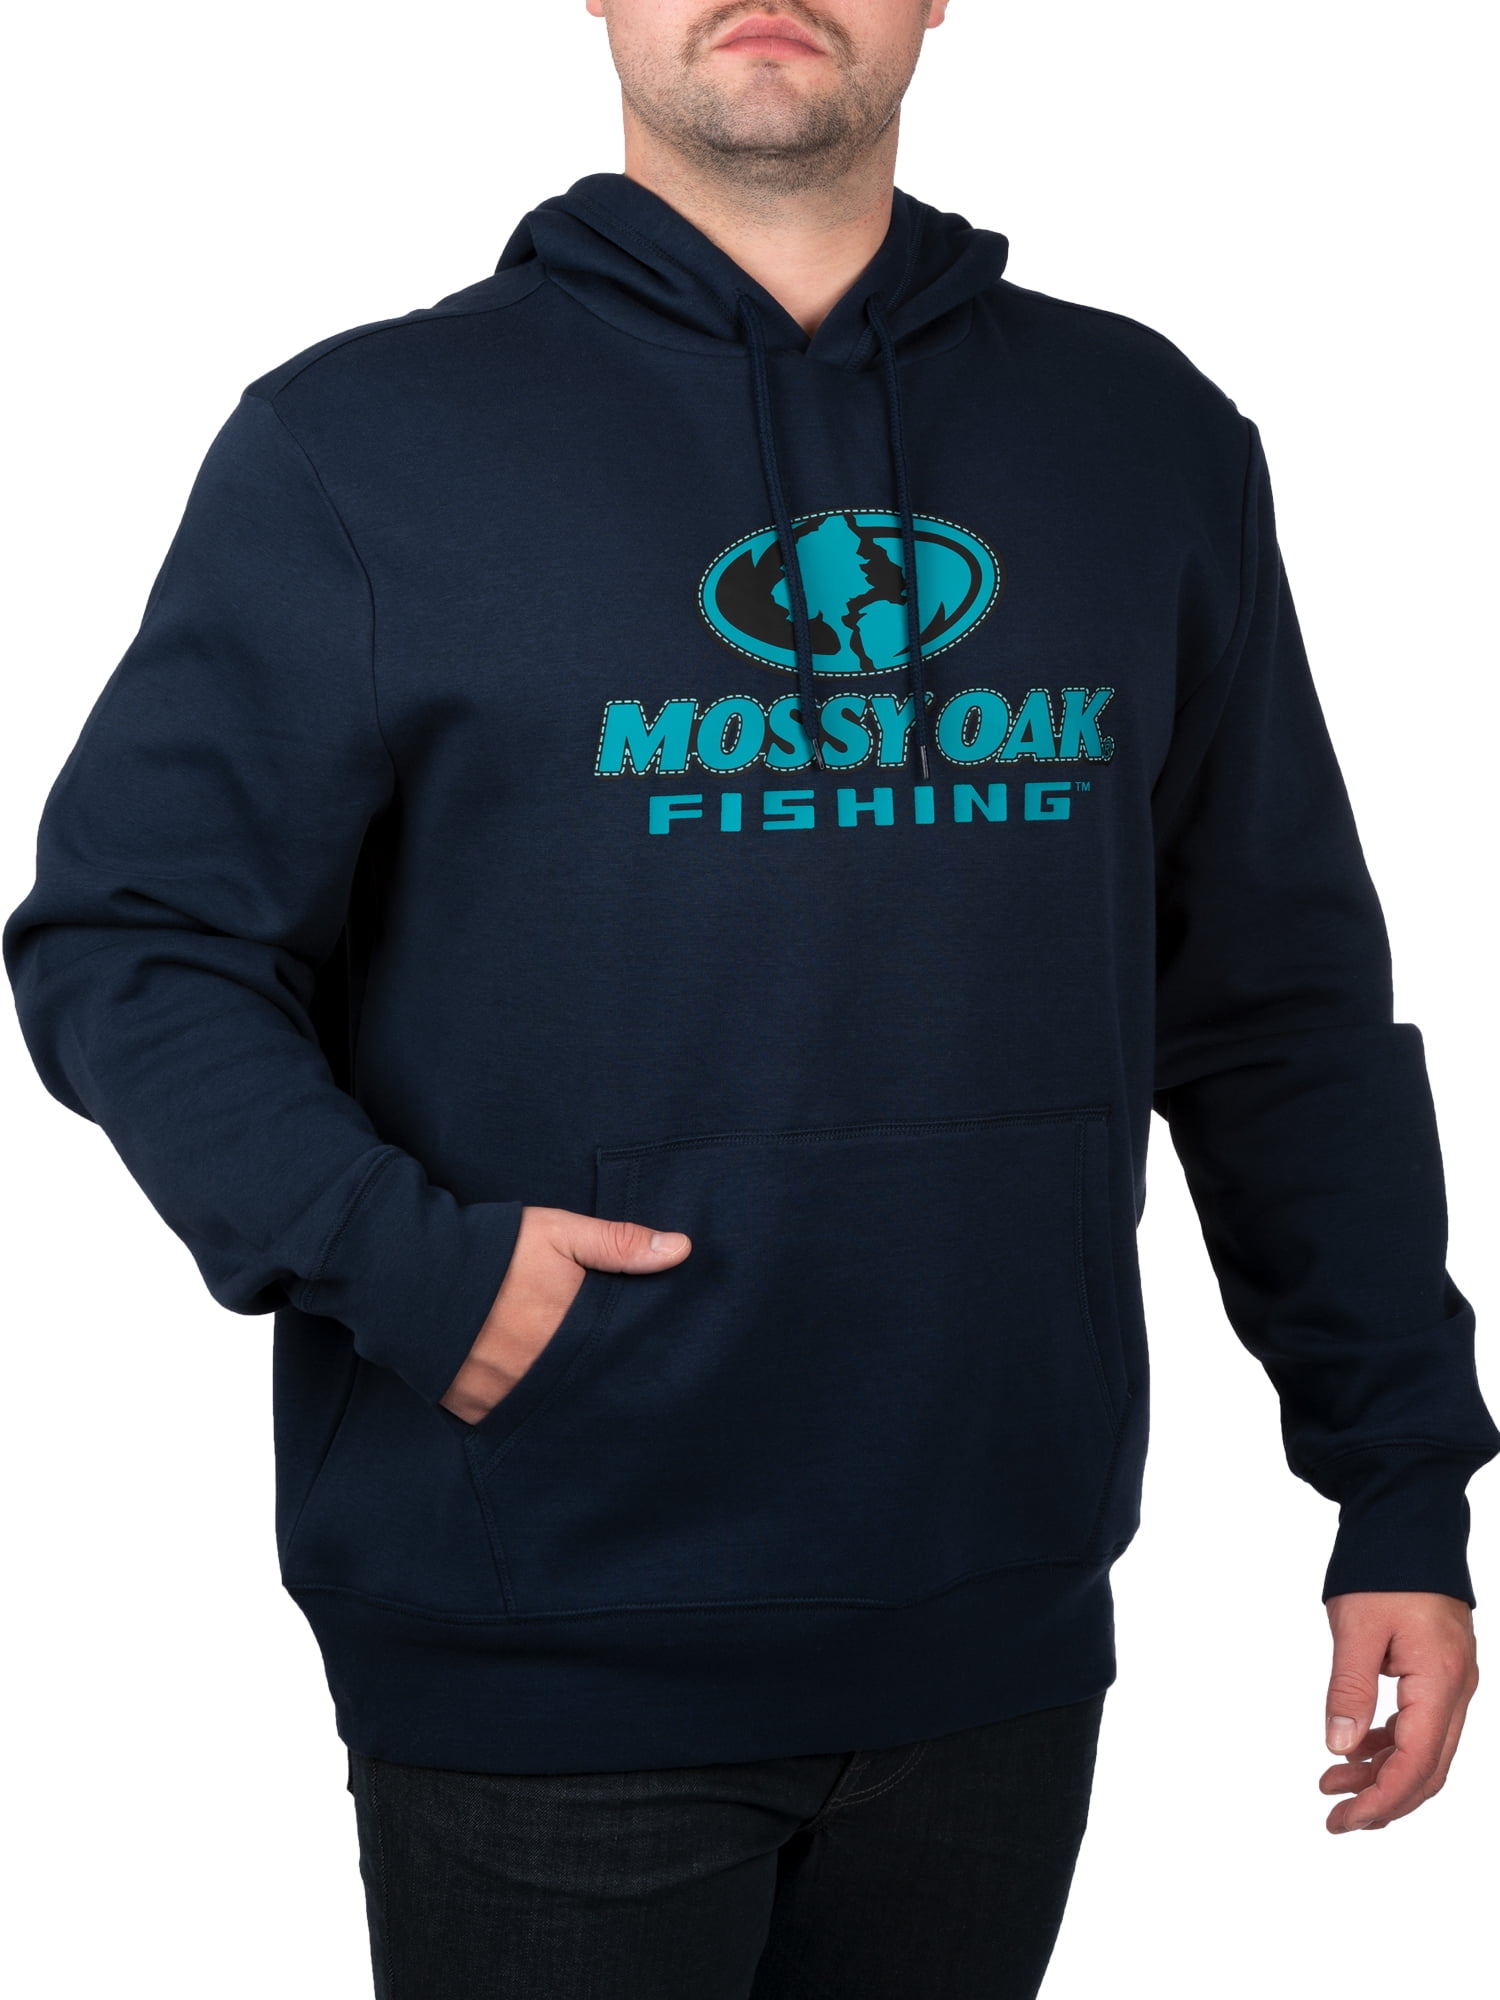 Mossy Oak Men's Graphic Hoodie Sweatshirt (Various Colors/Styles/Sizes) $6.35 + Free S&H w/ Walmart+ or $35+